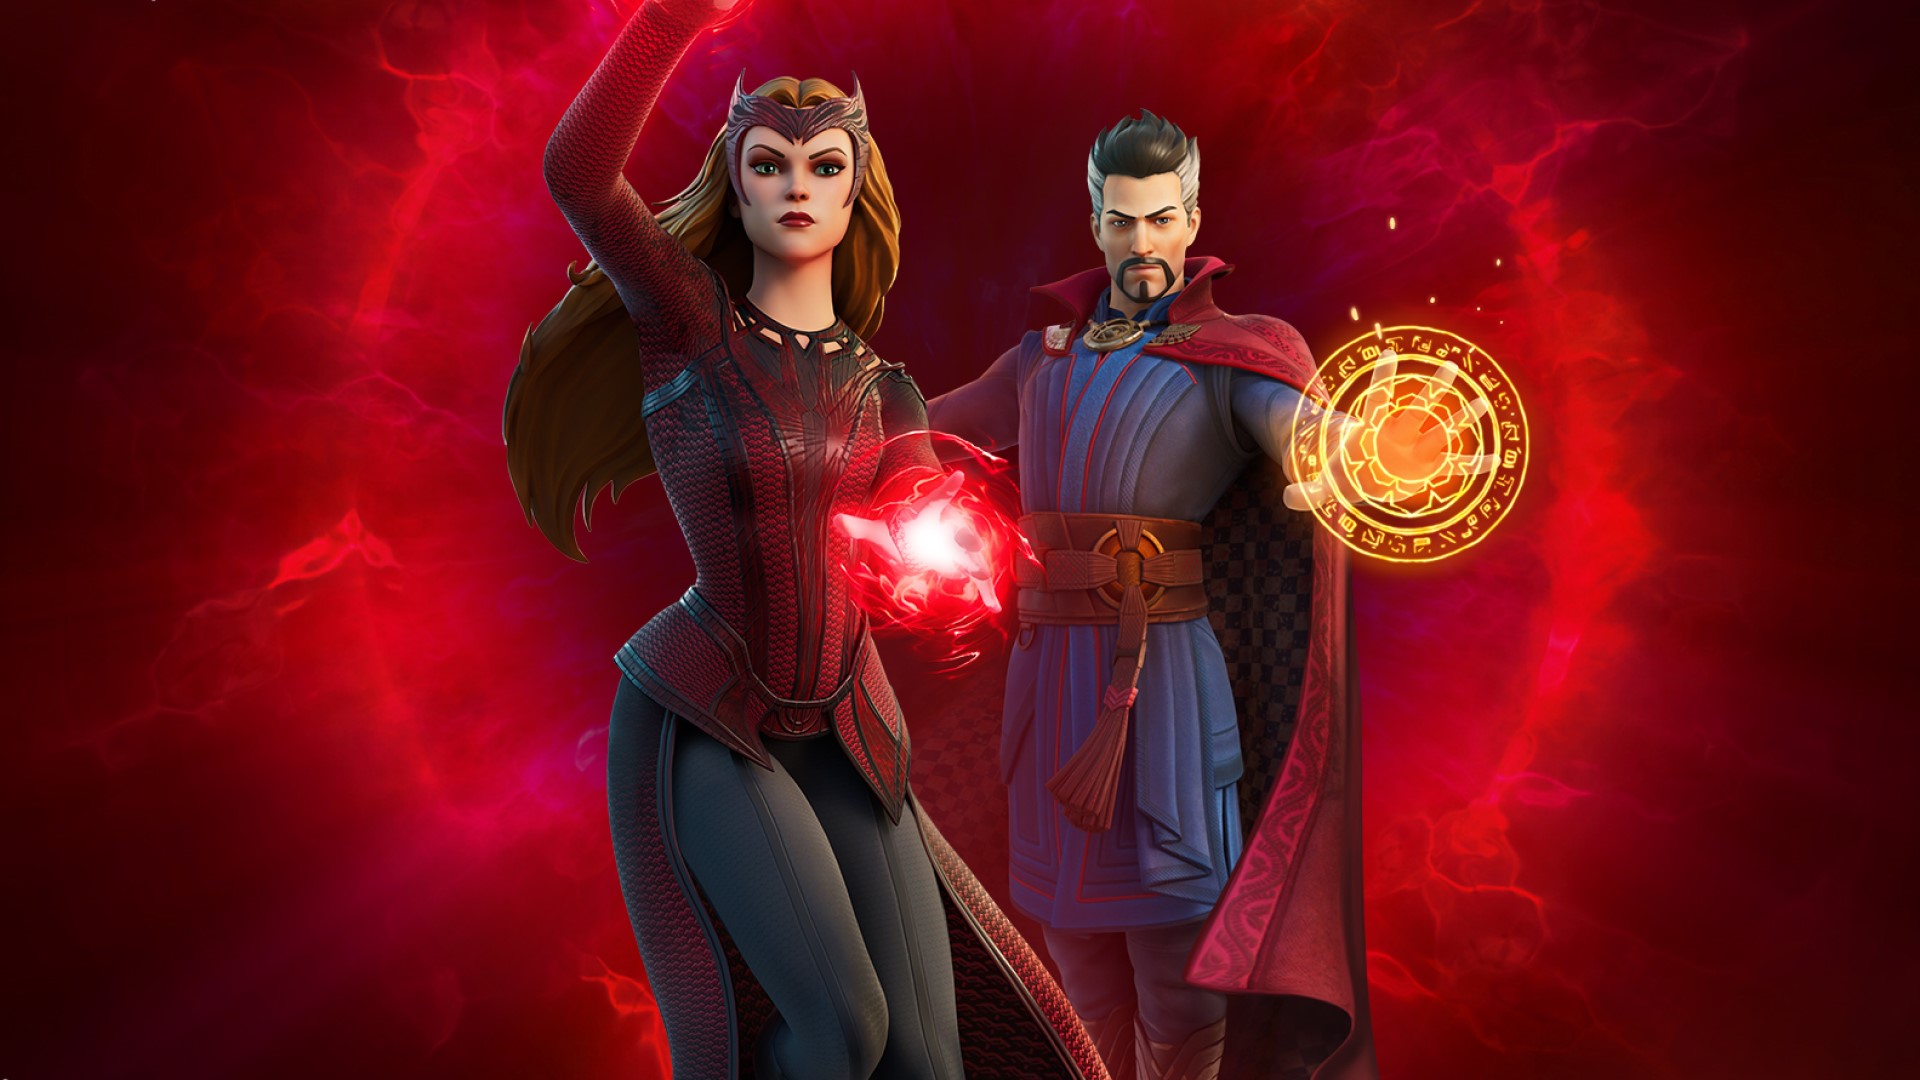 Fortnite Skins for Scarlet Witch and Doctor Strange